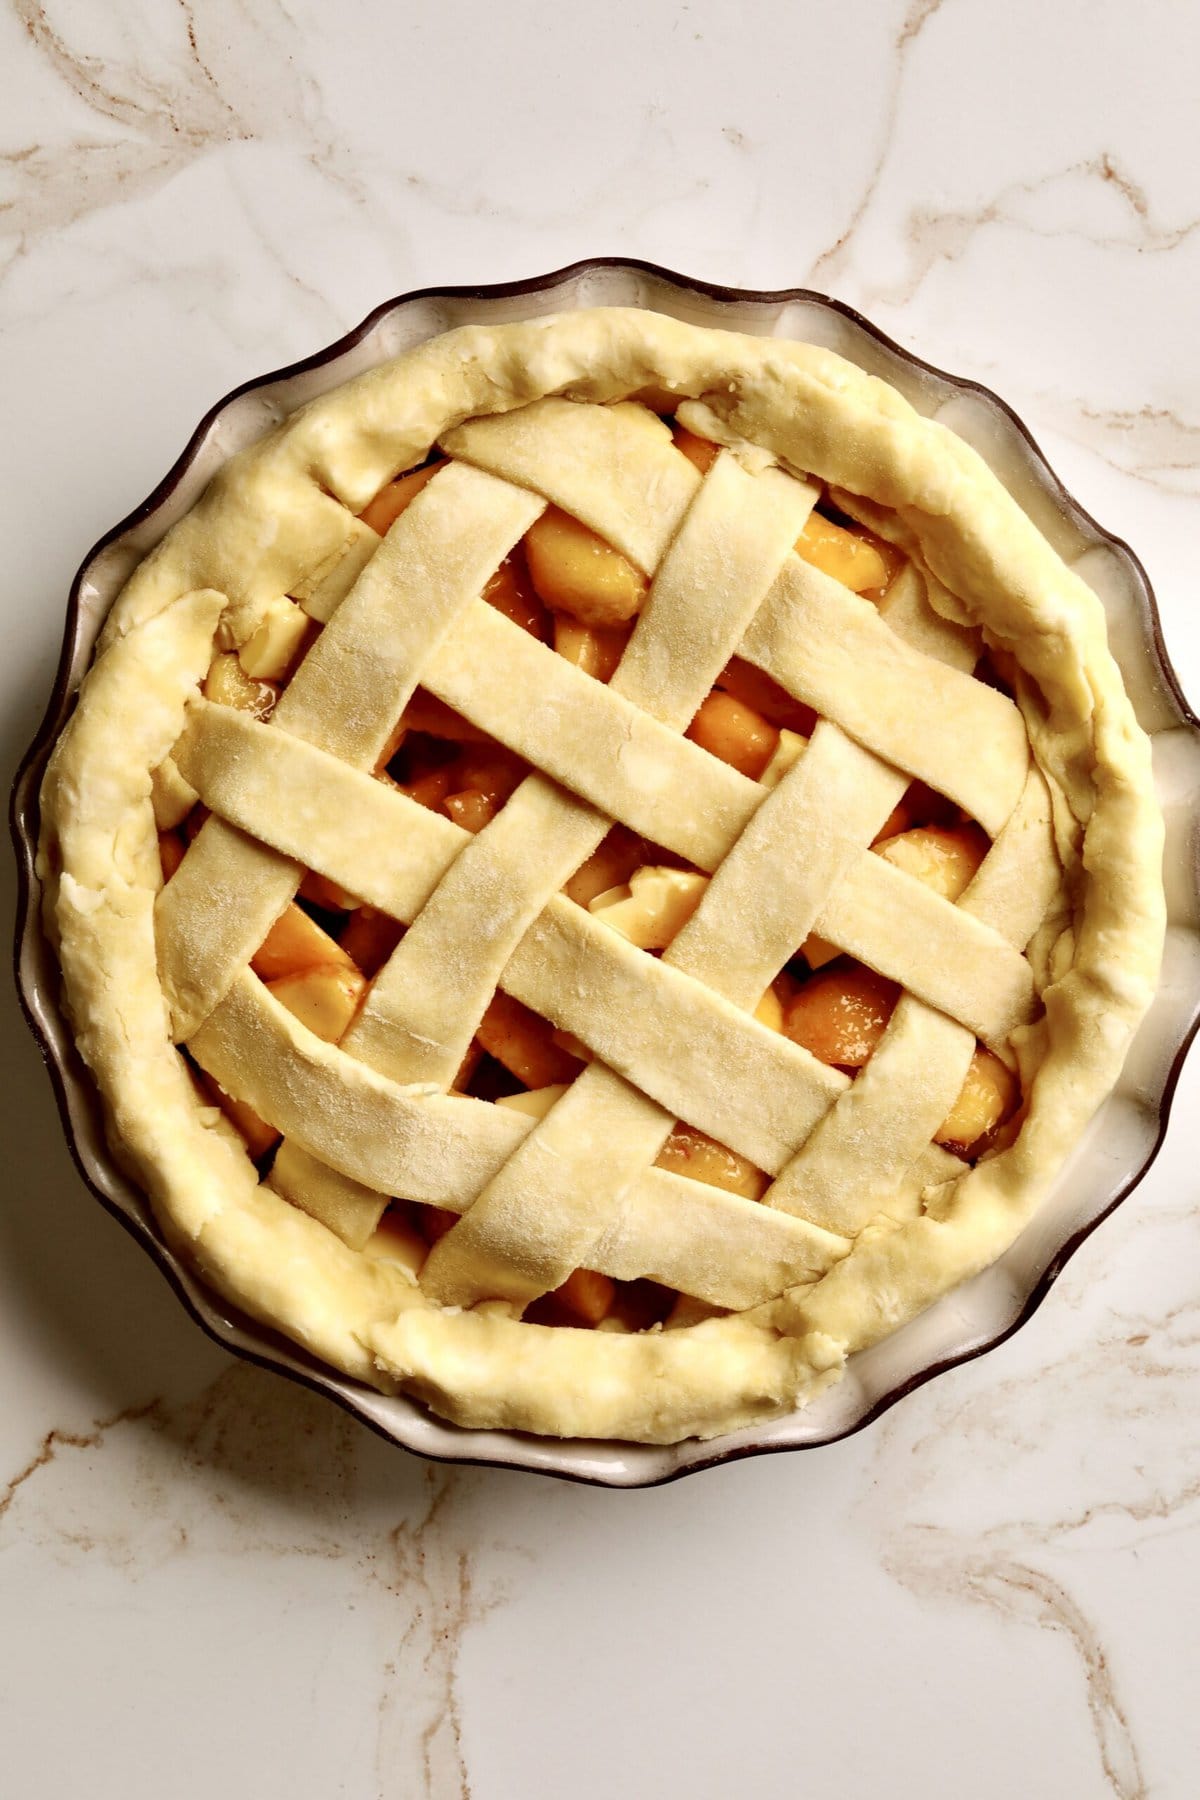 How to make fresh peach pie recipe step-by-step: making lattice top as final layer of peach pie.